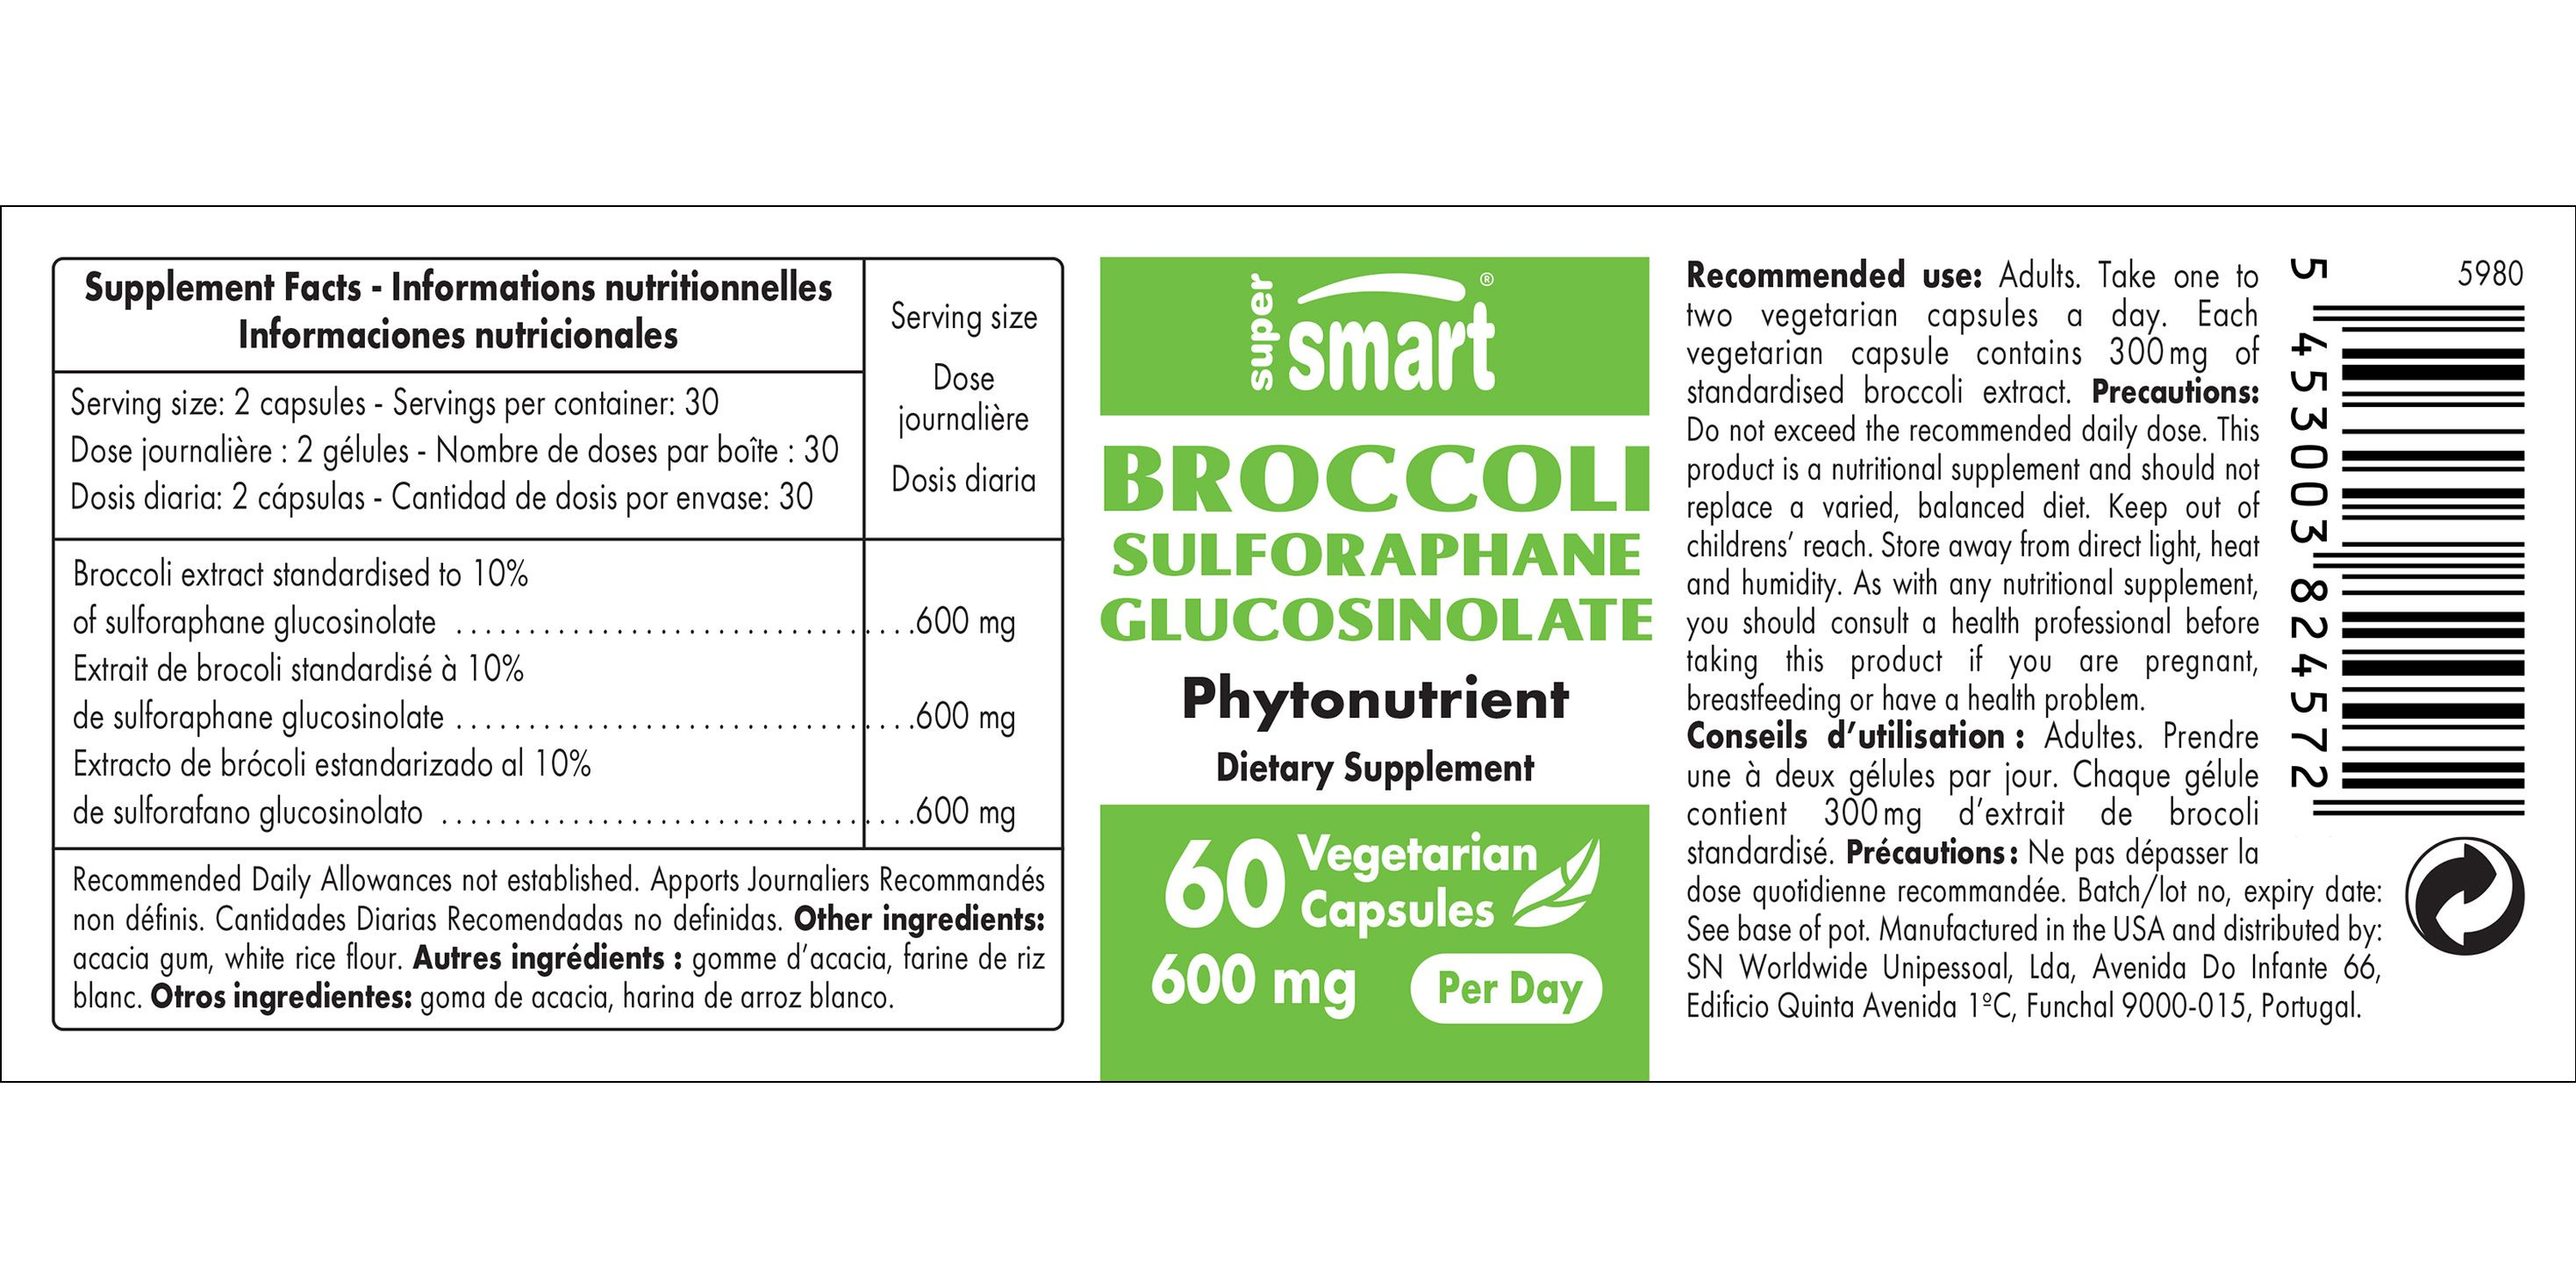 Broccoli Sulforaphane Glucosinolate